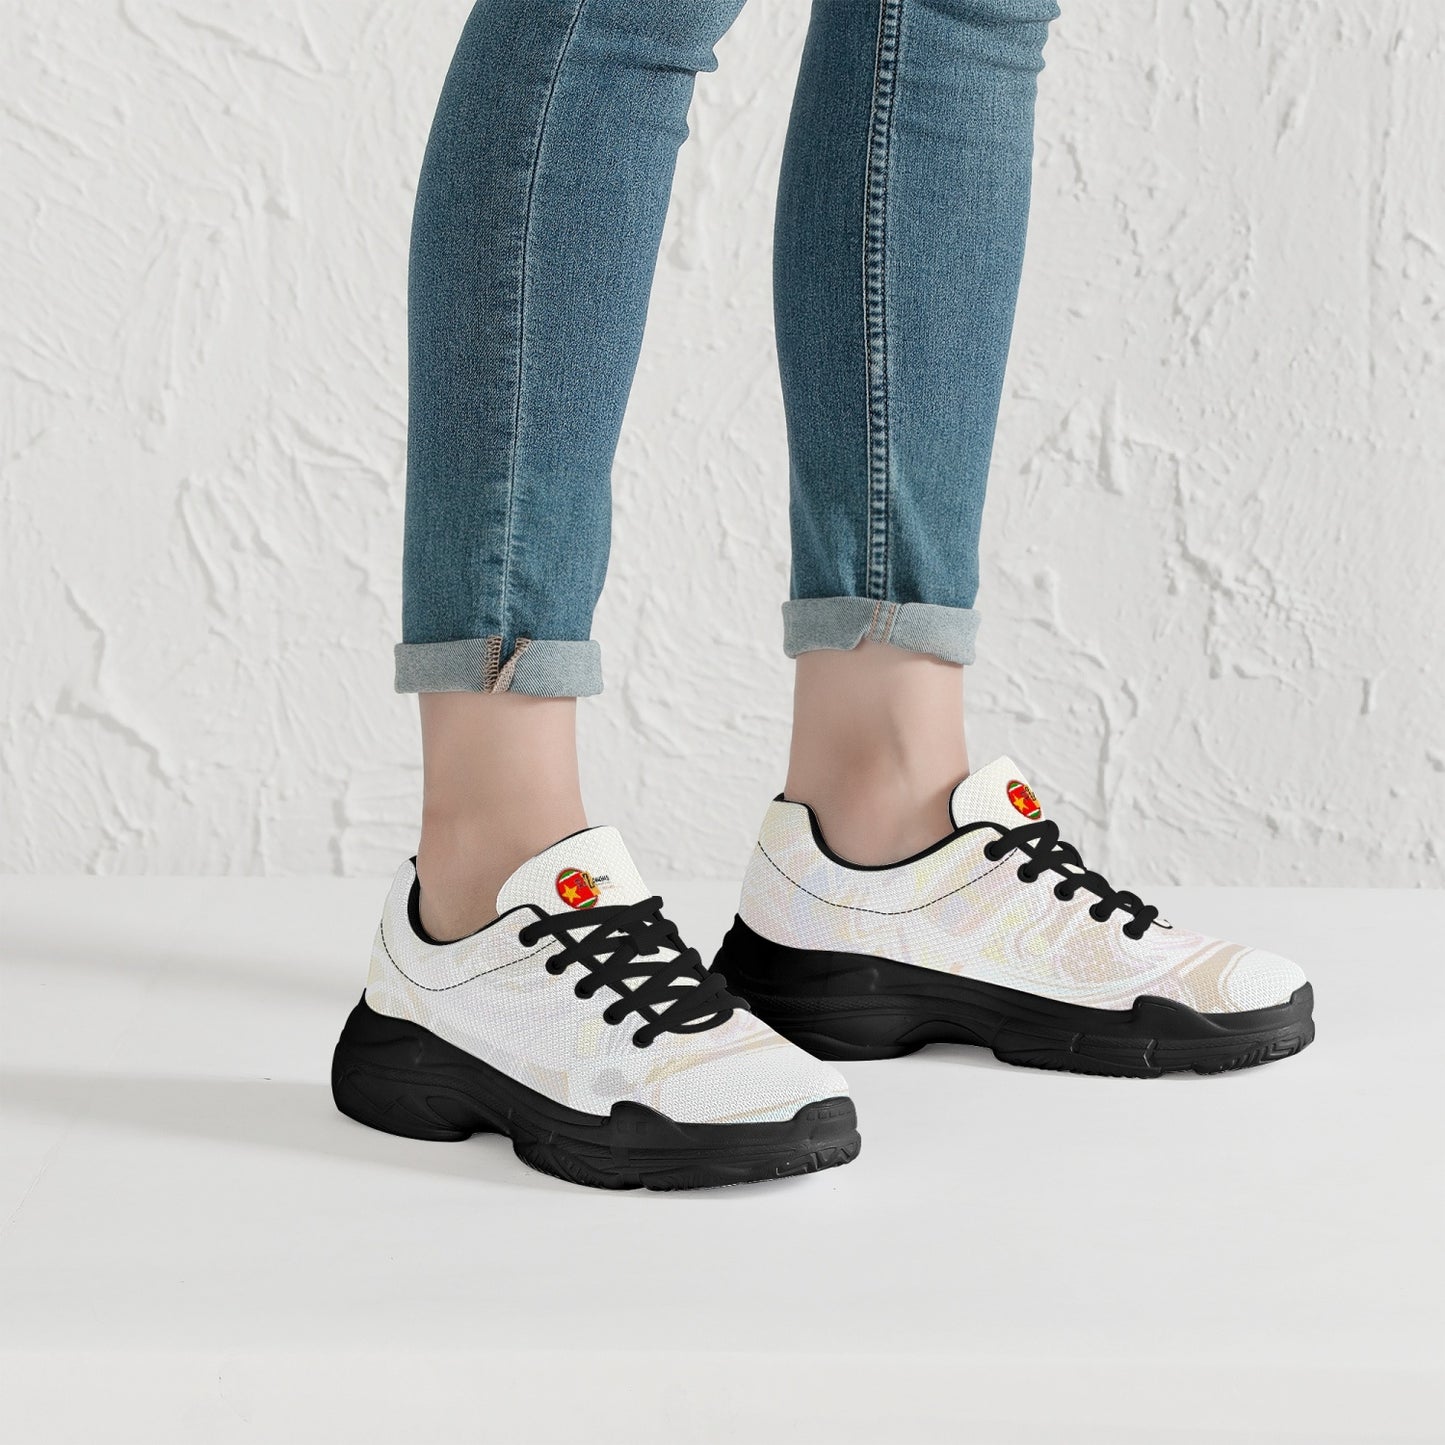 Unisex sneakers "Cream" (White / Black)